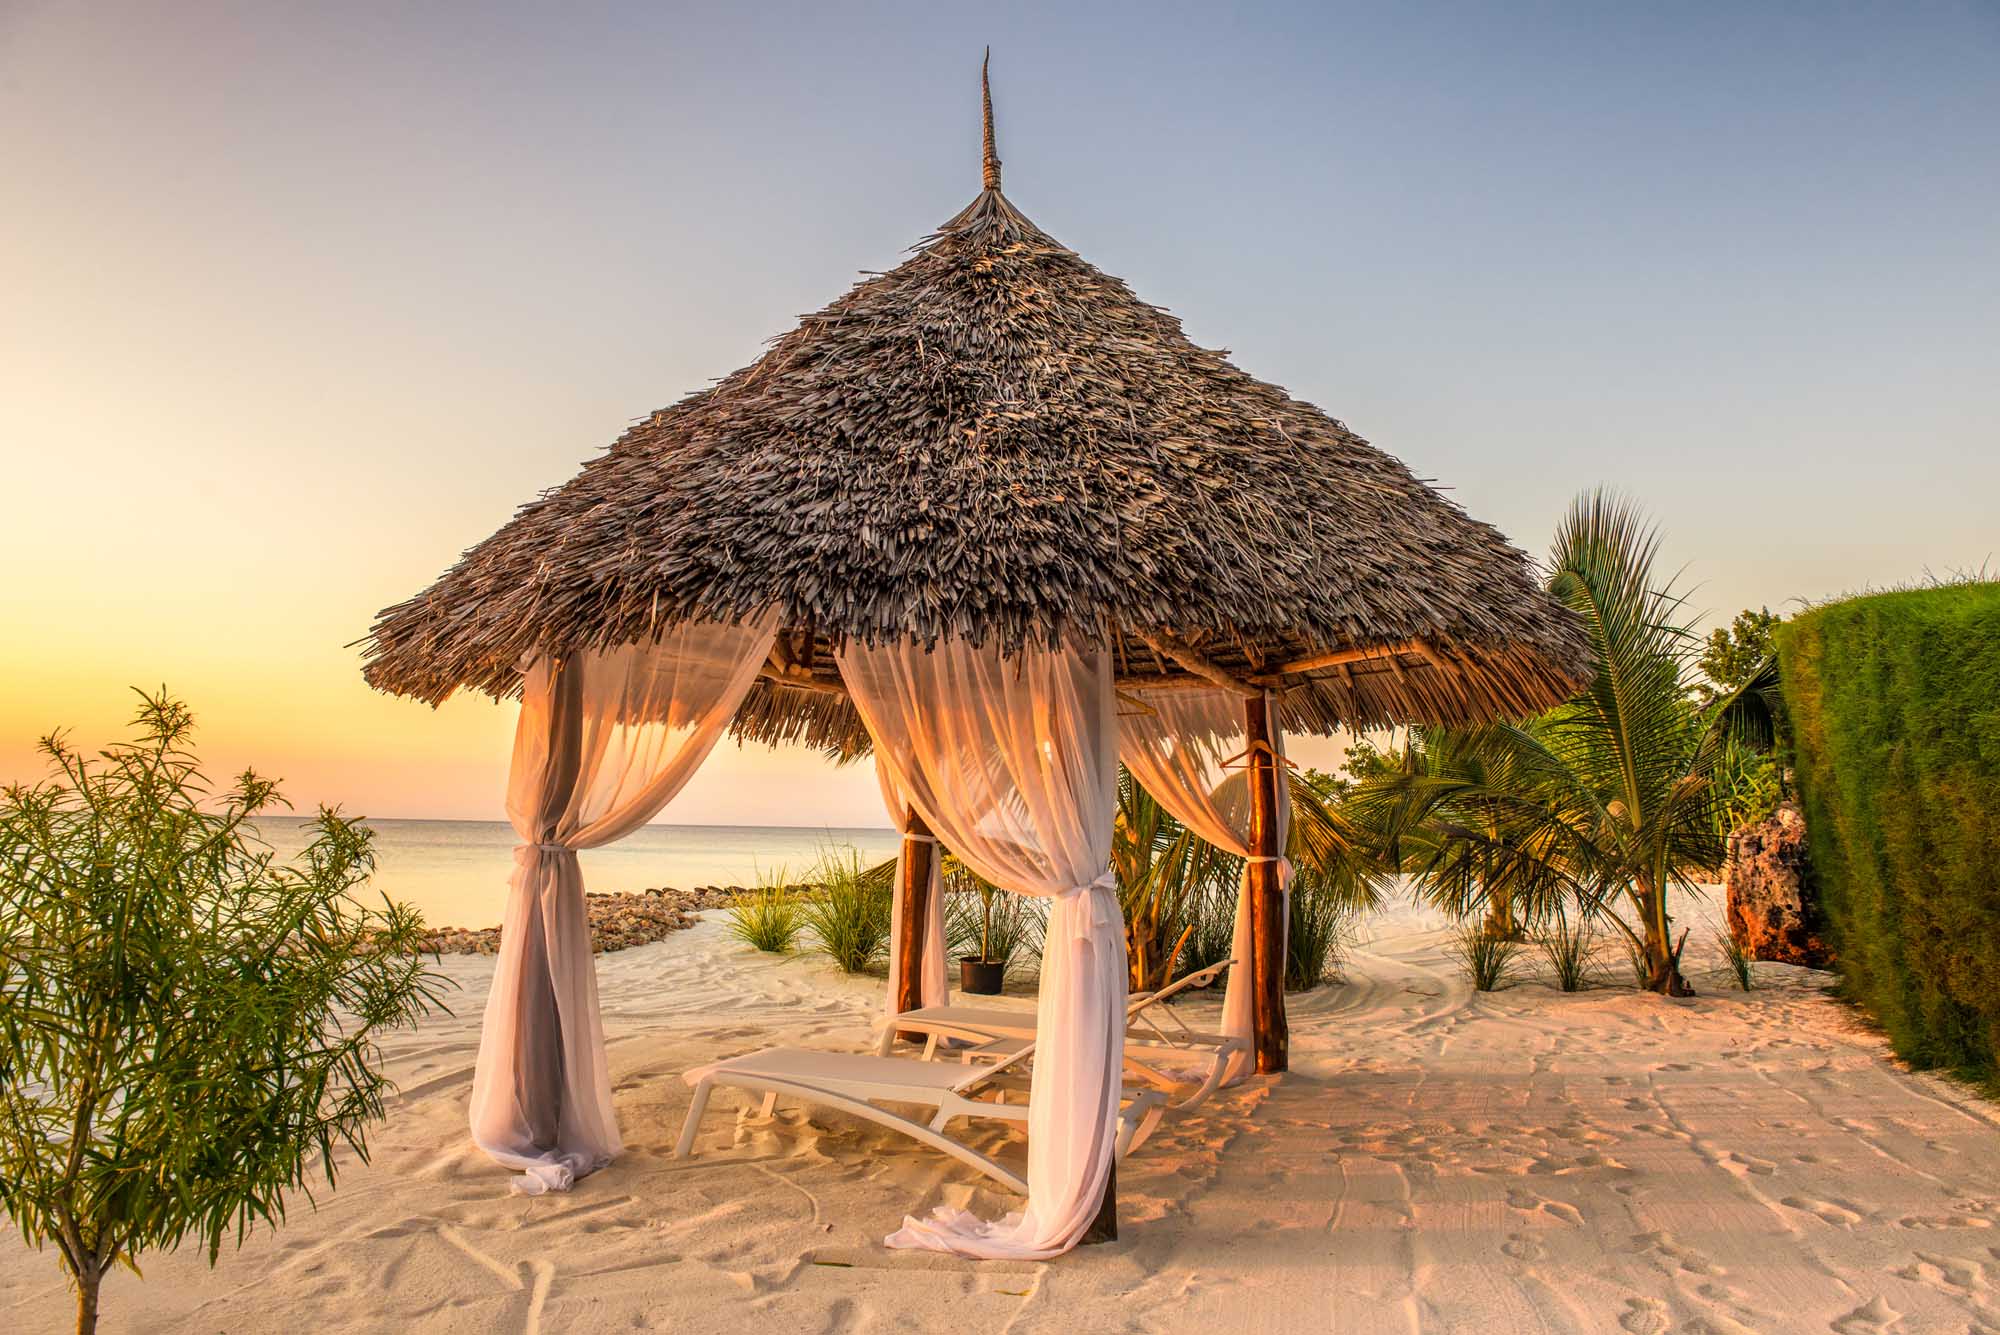 Beach lounge chairs at sunset in Zanzibar.